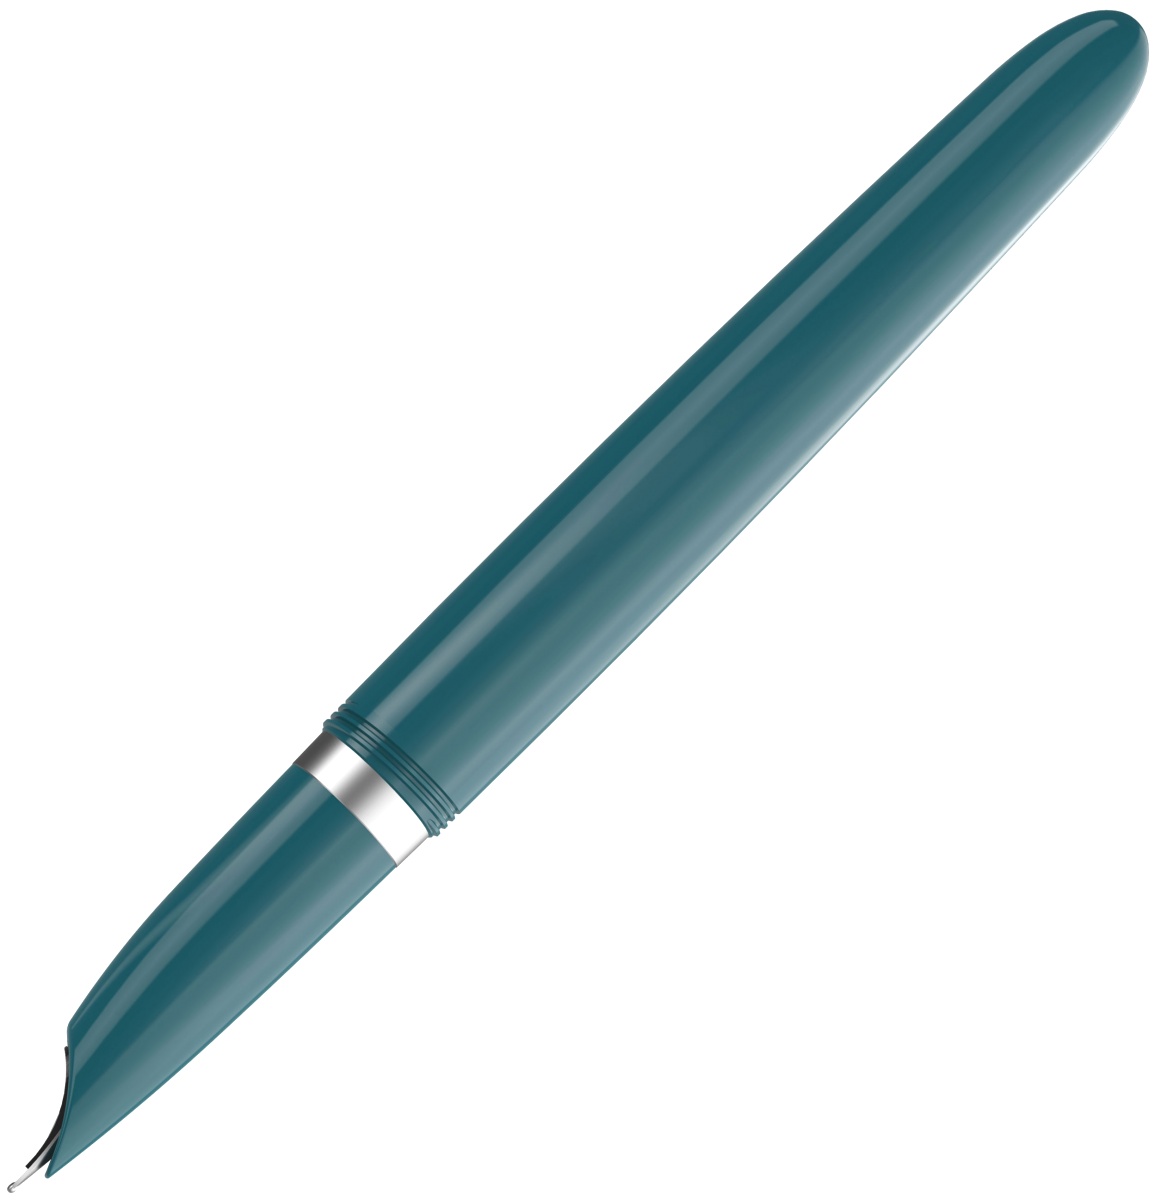  Ручка перьевая Parker 51 Core, Teal Blue CT (Перо F), фото 5